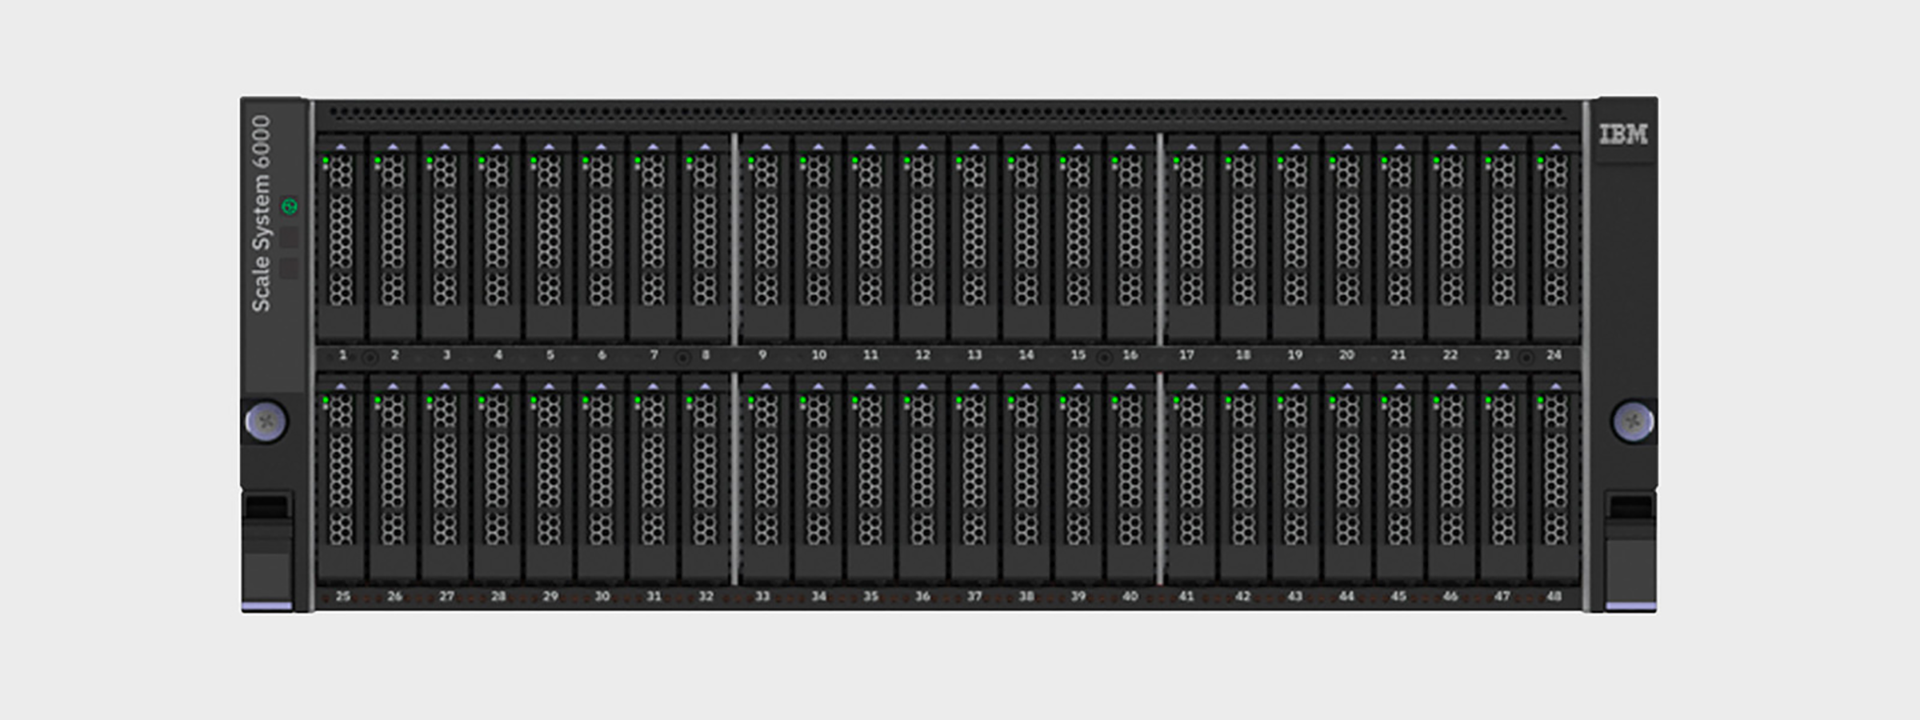 image of IBM Storage Scale System 6000